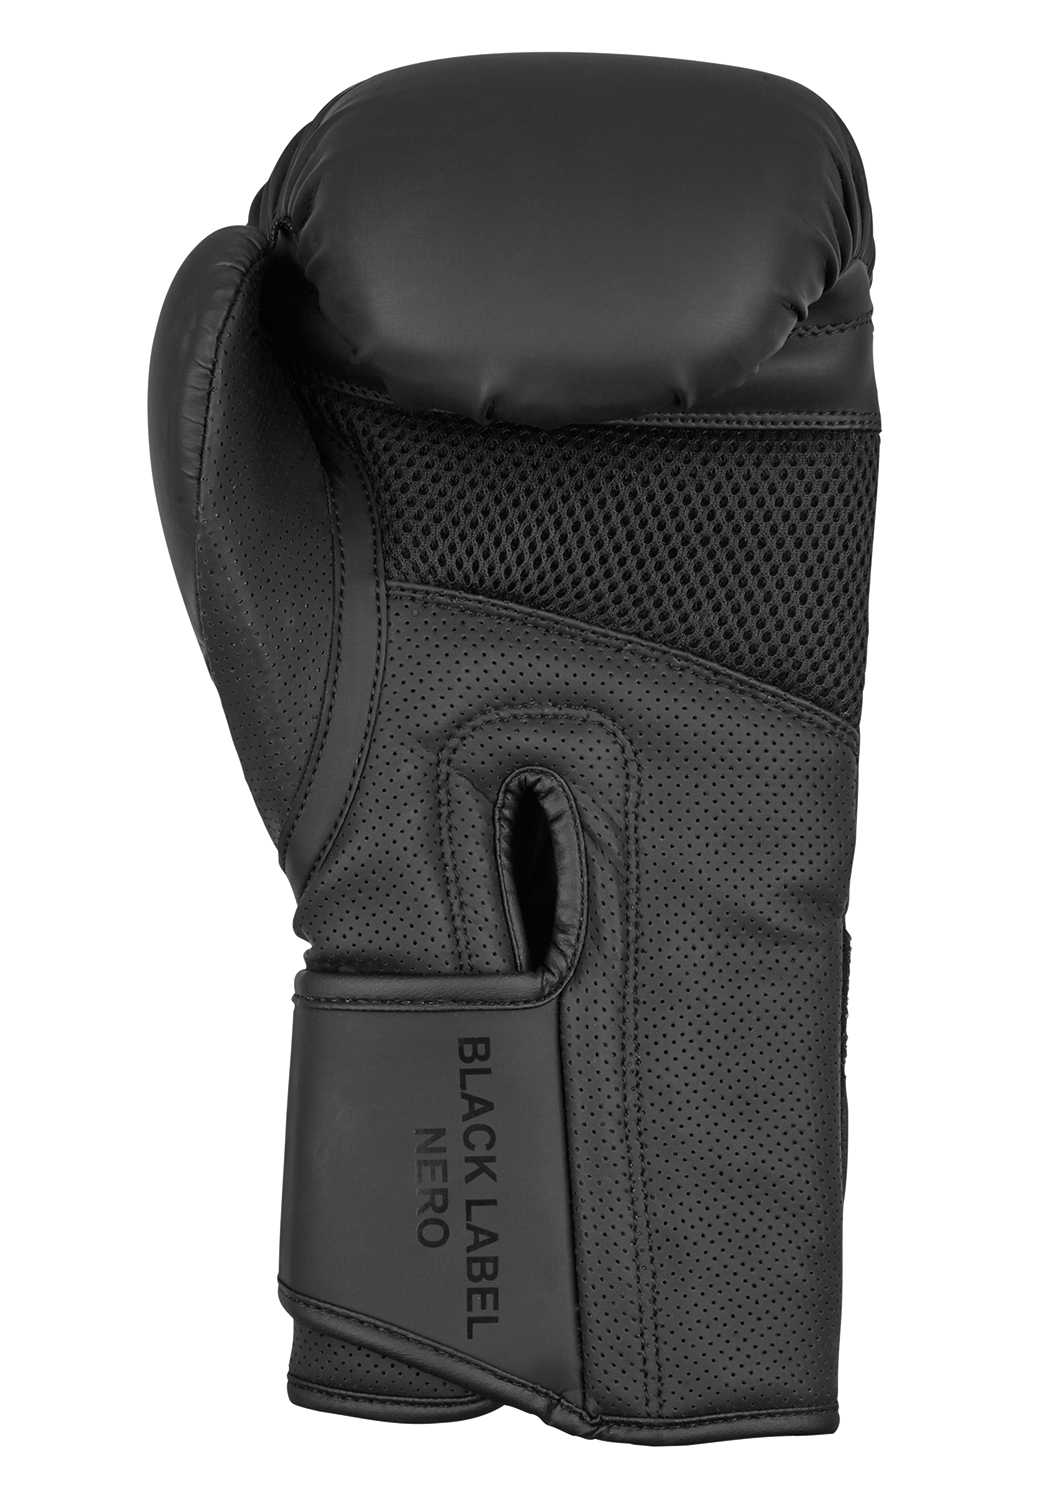 Benlee Black Label Nero boxing gloves 14 oz